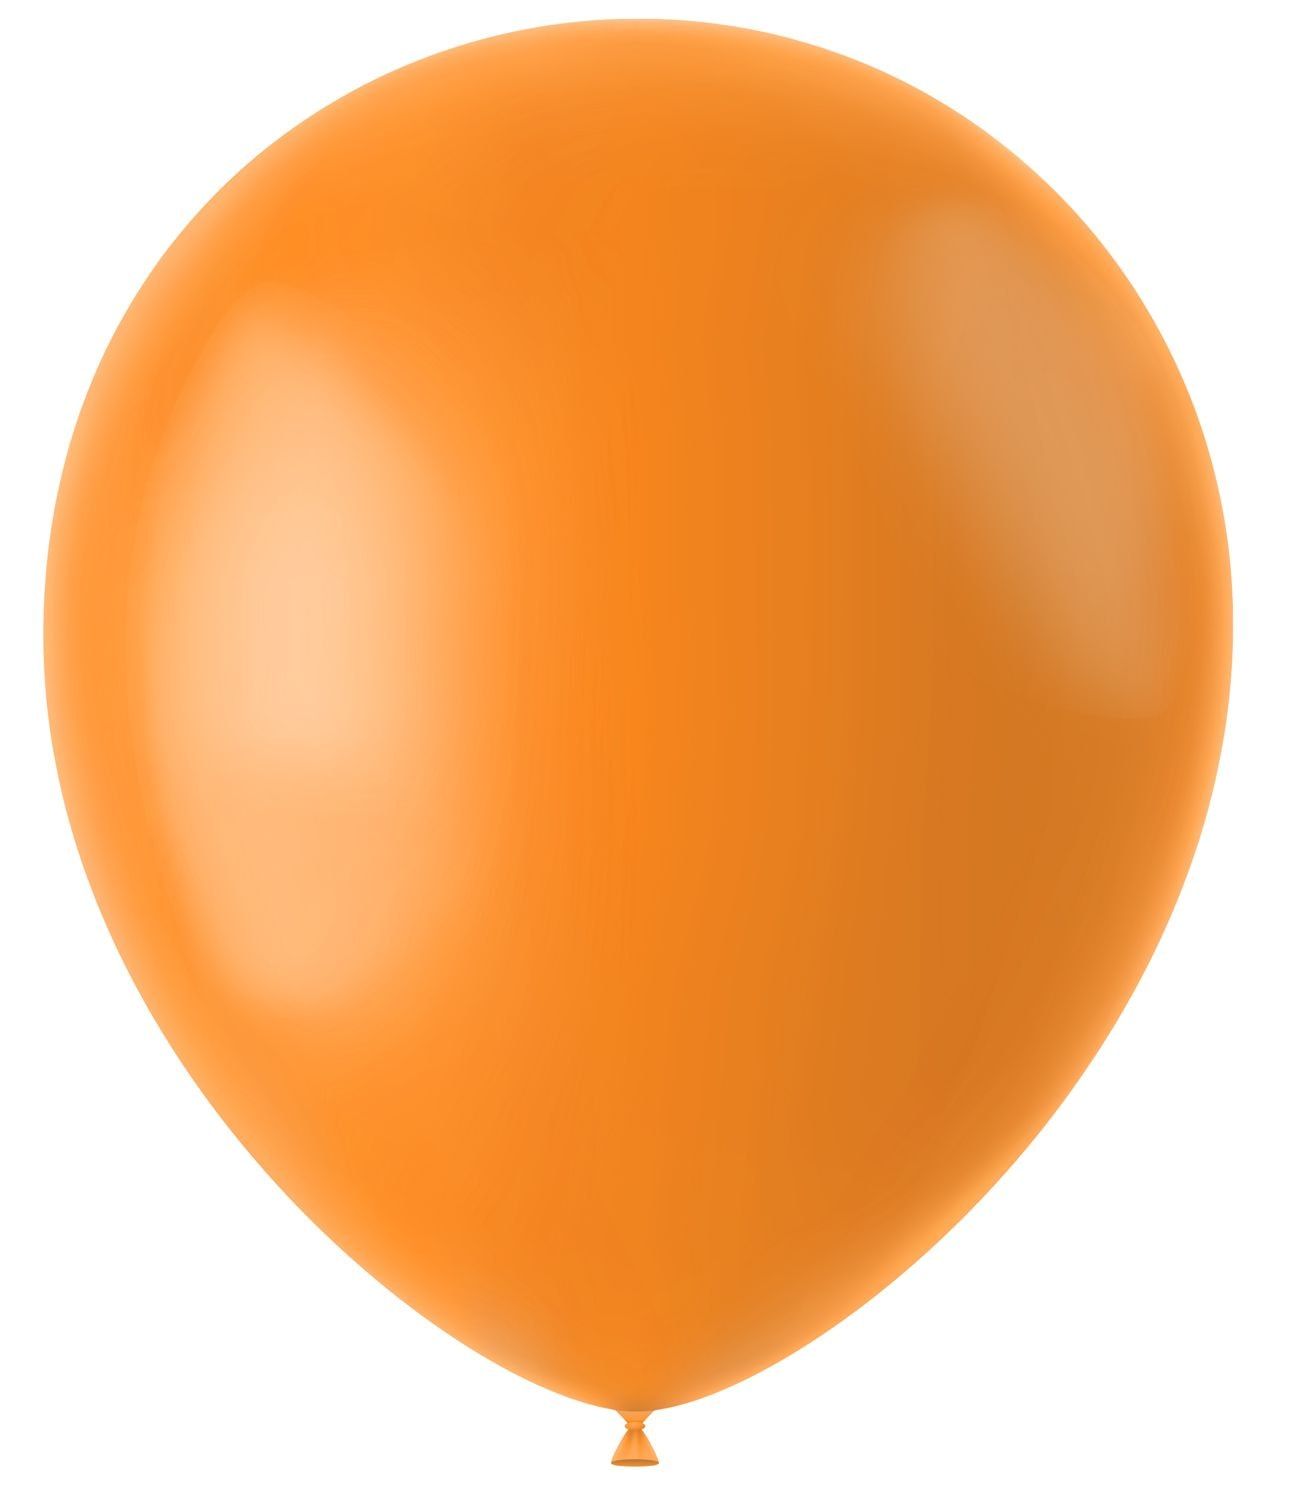 Tangerine oranje mat ballonnen 100 stuks